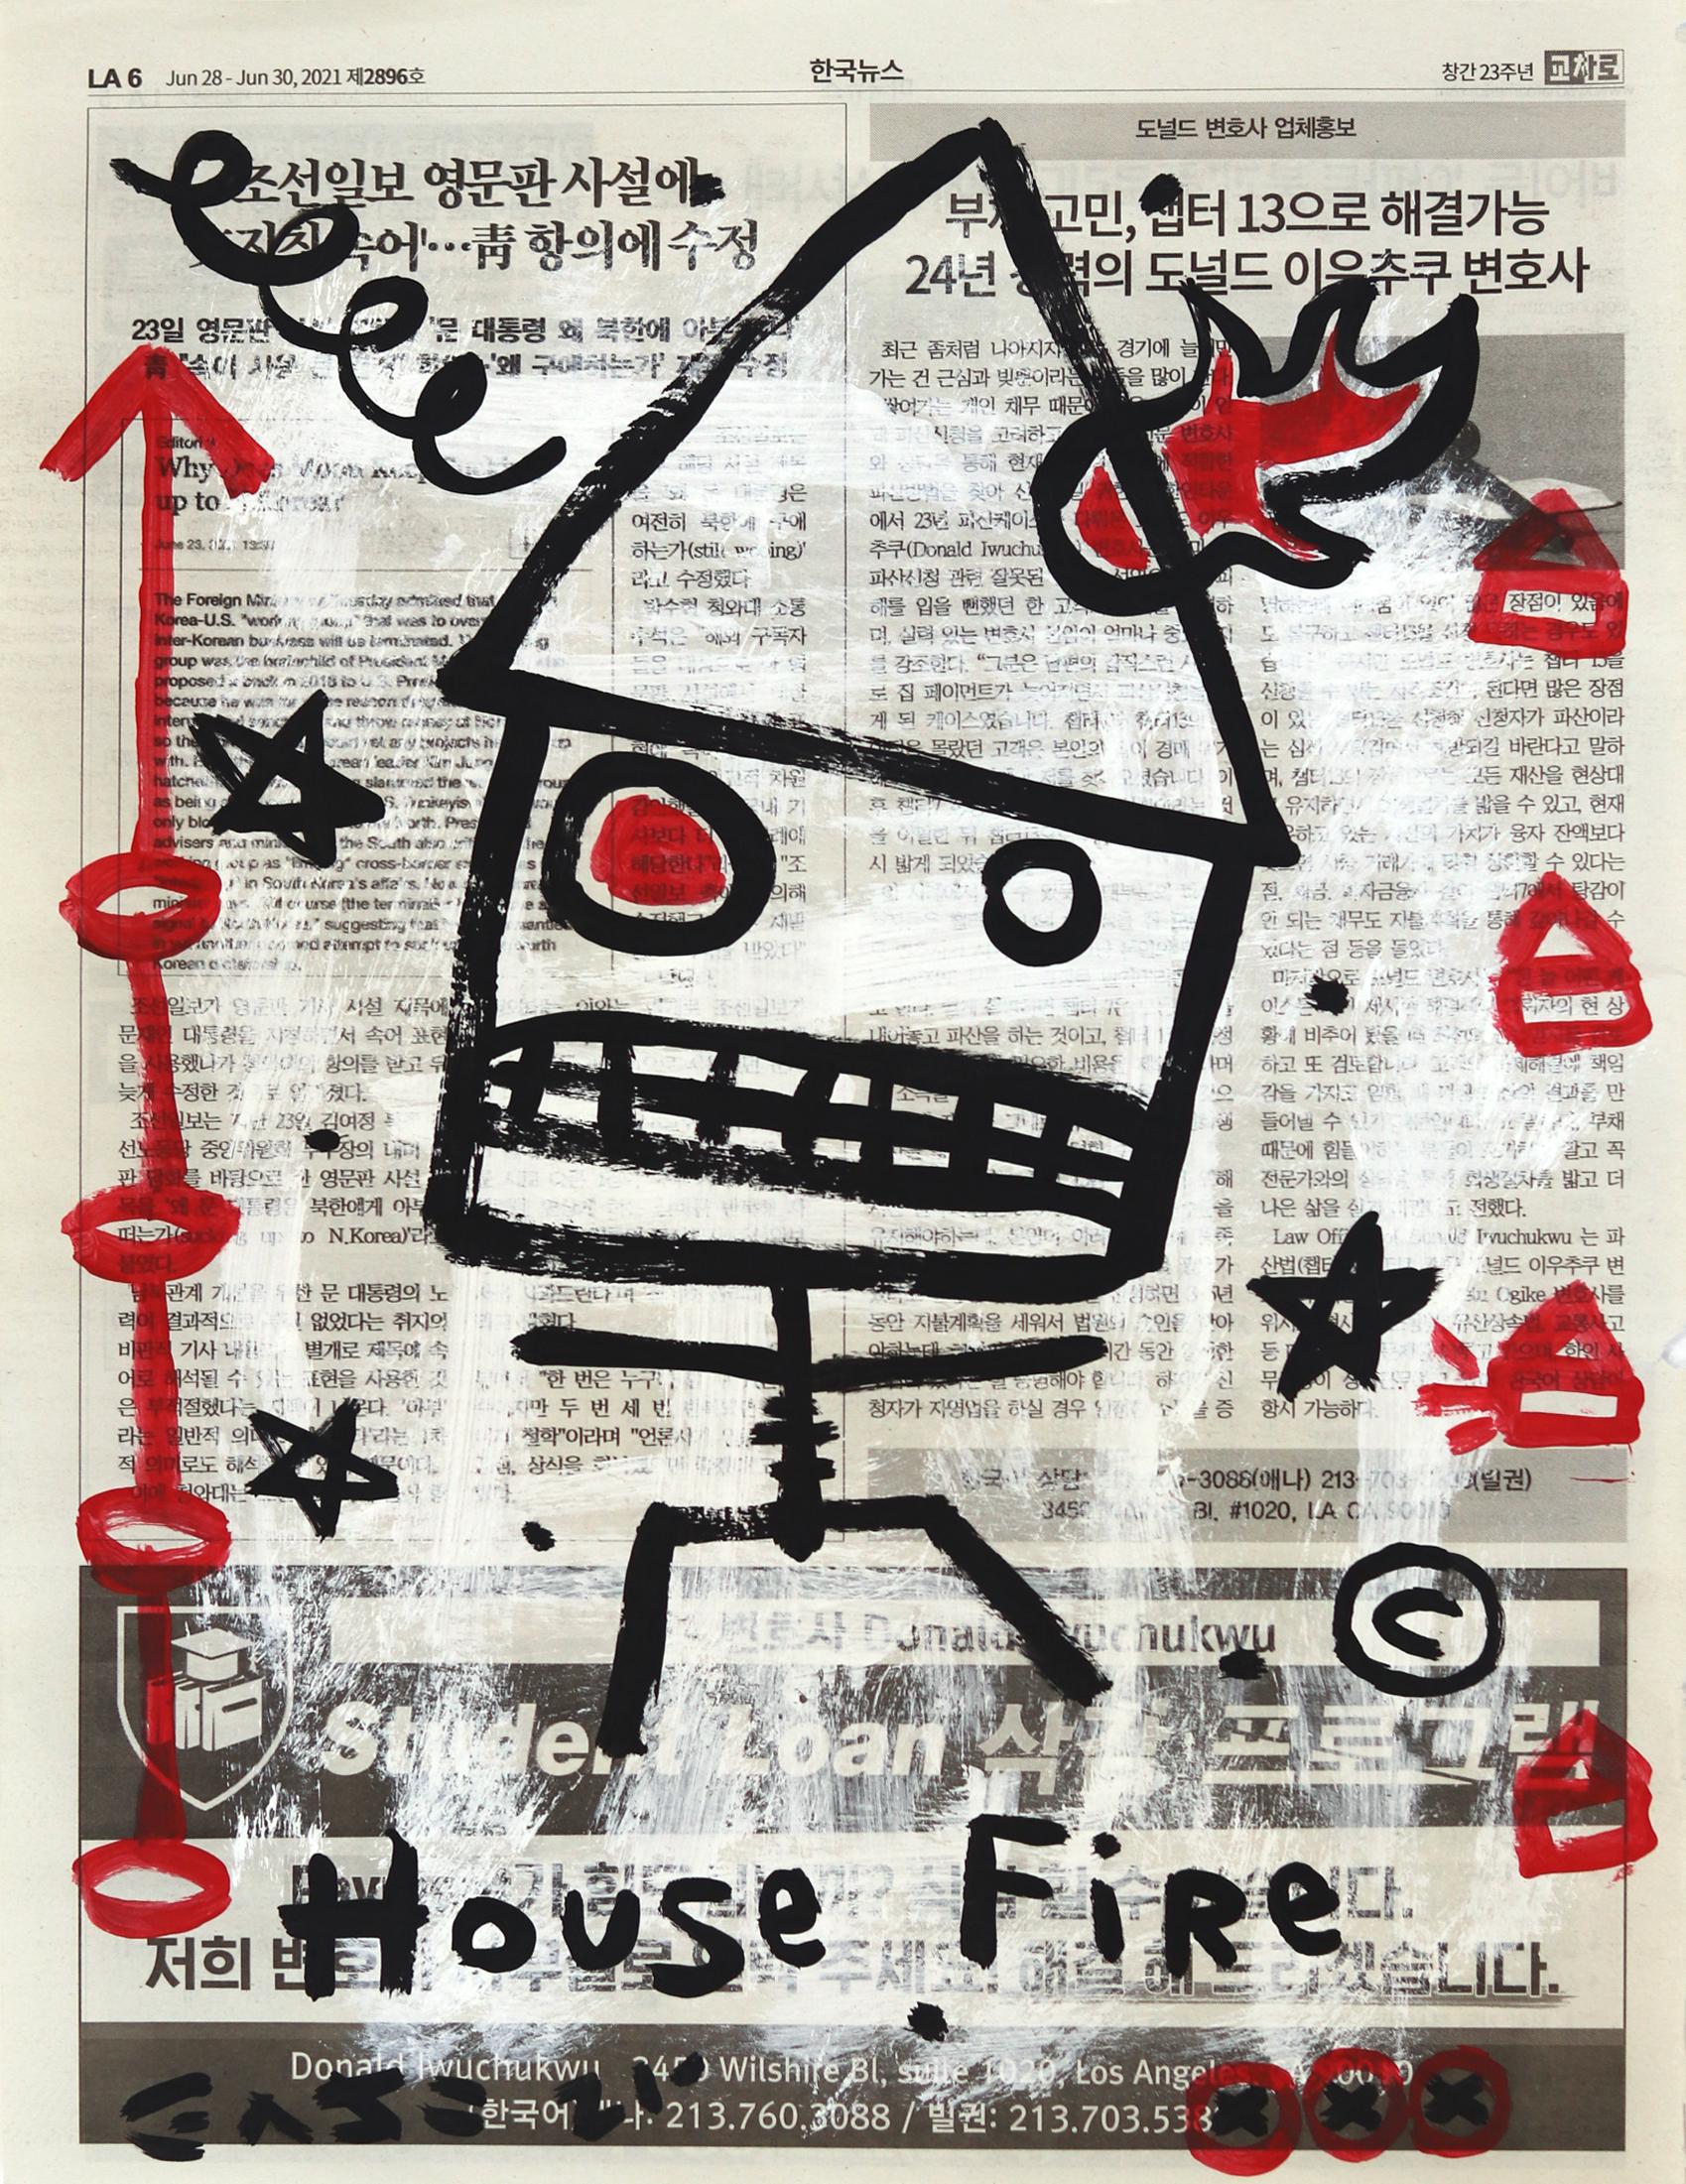 Incendie de maison - Mixed Media Art de Gary John